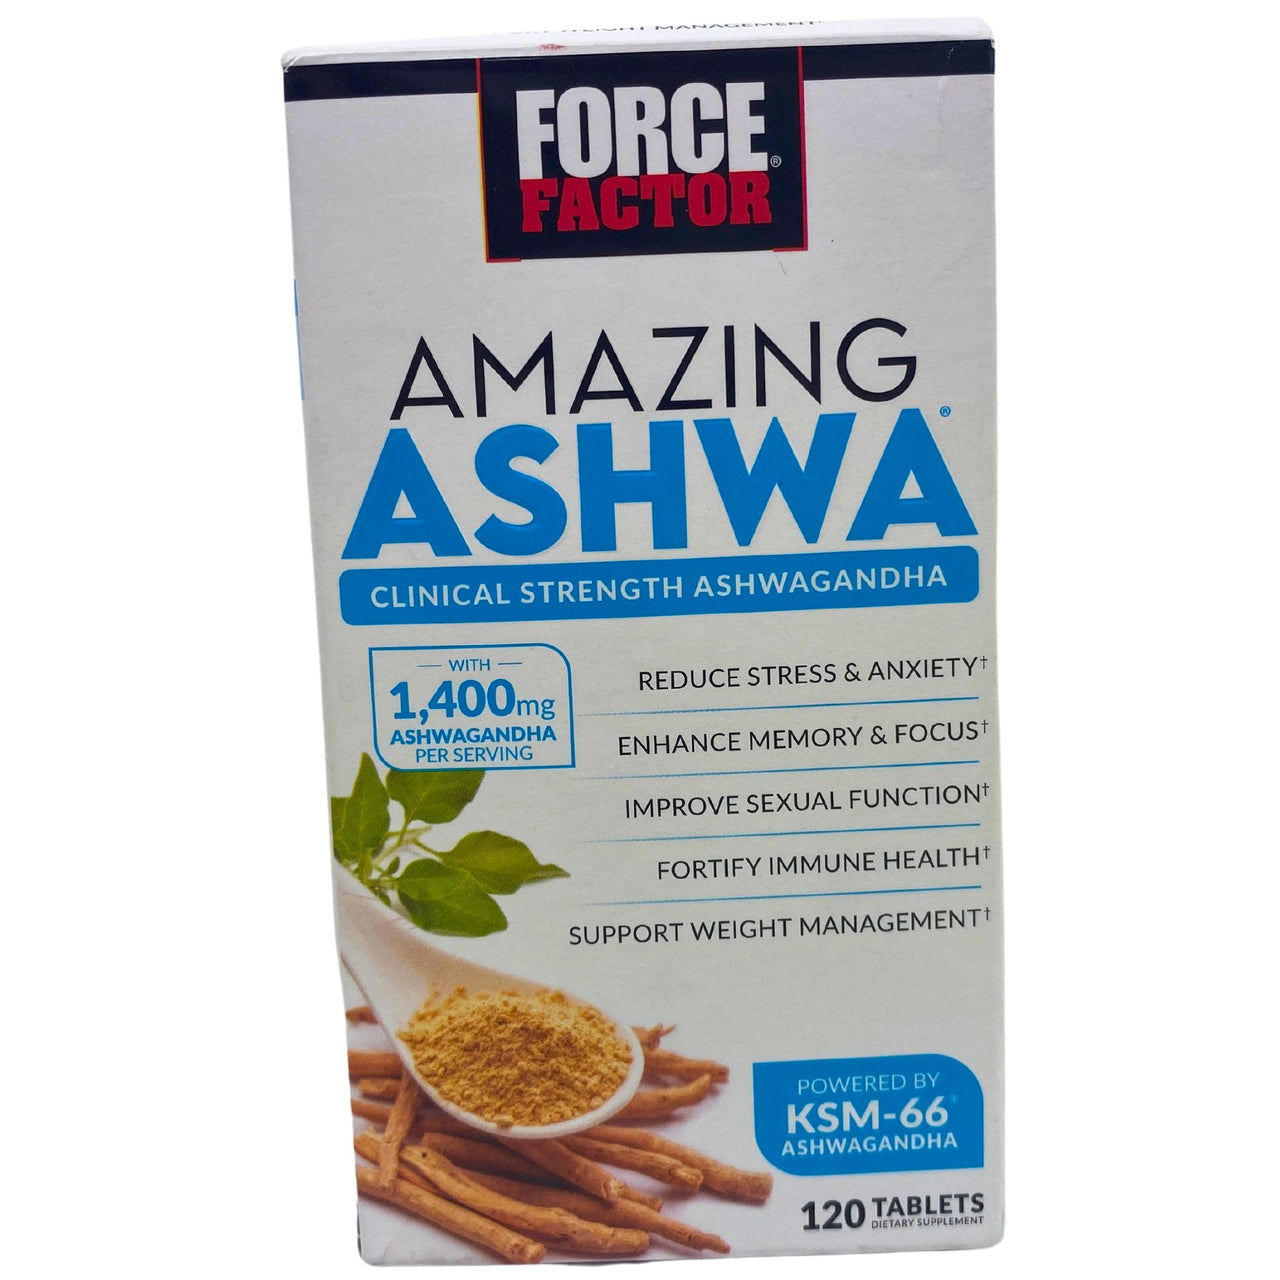 Force Factor Amazing Ashwa Clinical Strength Ashwagandha